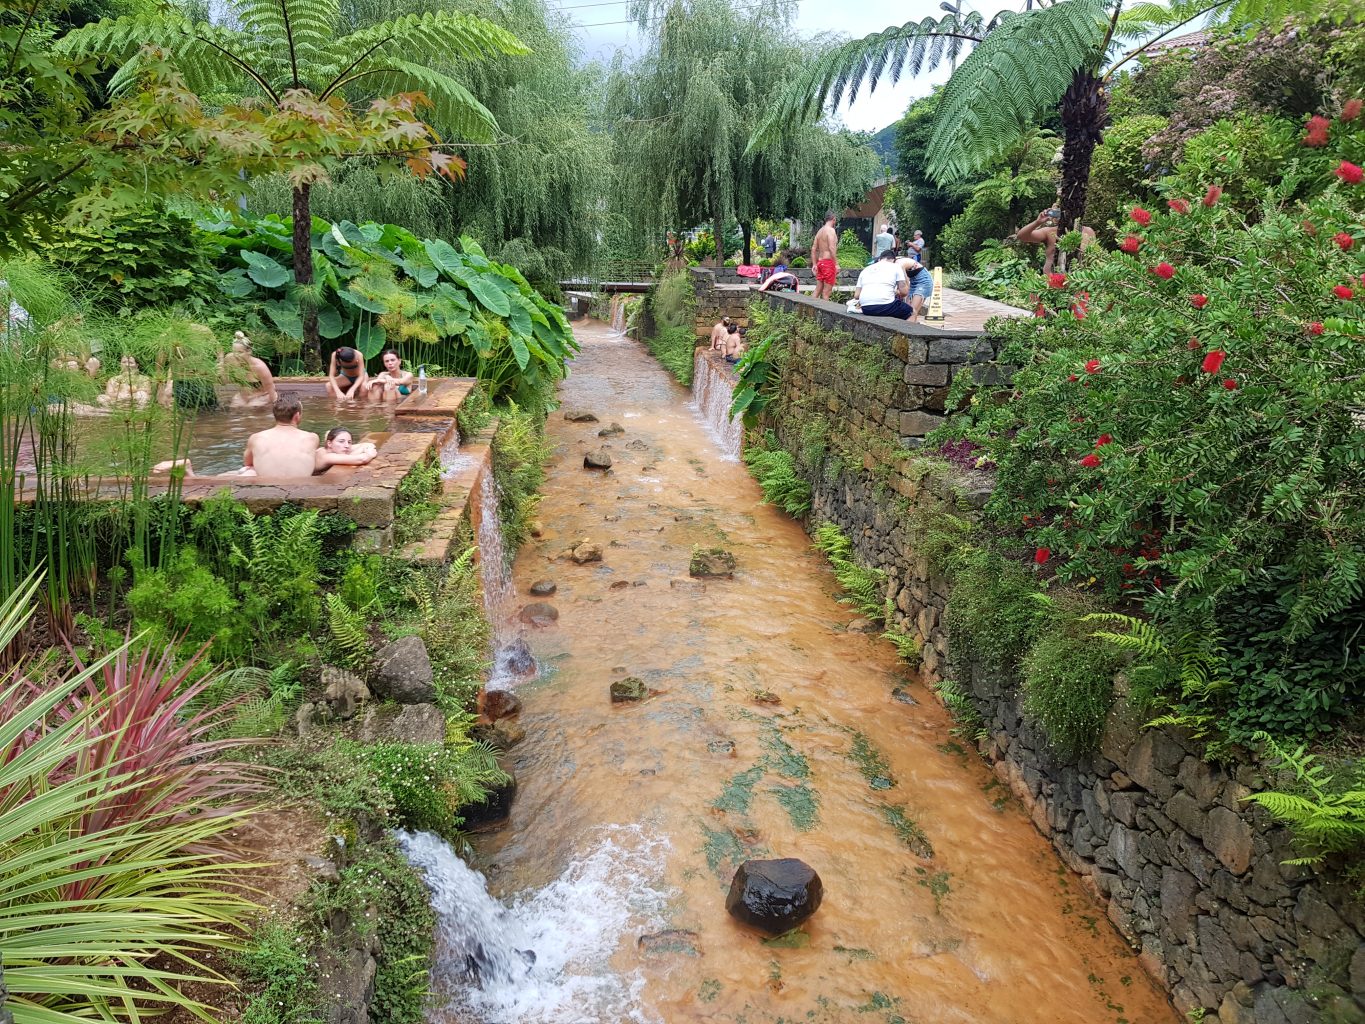 Azores hot spring